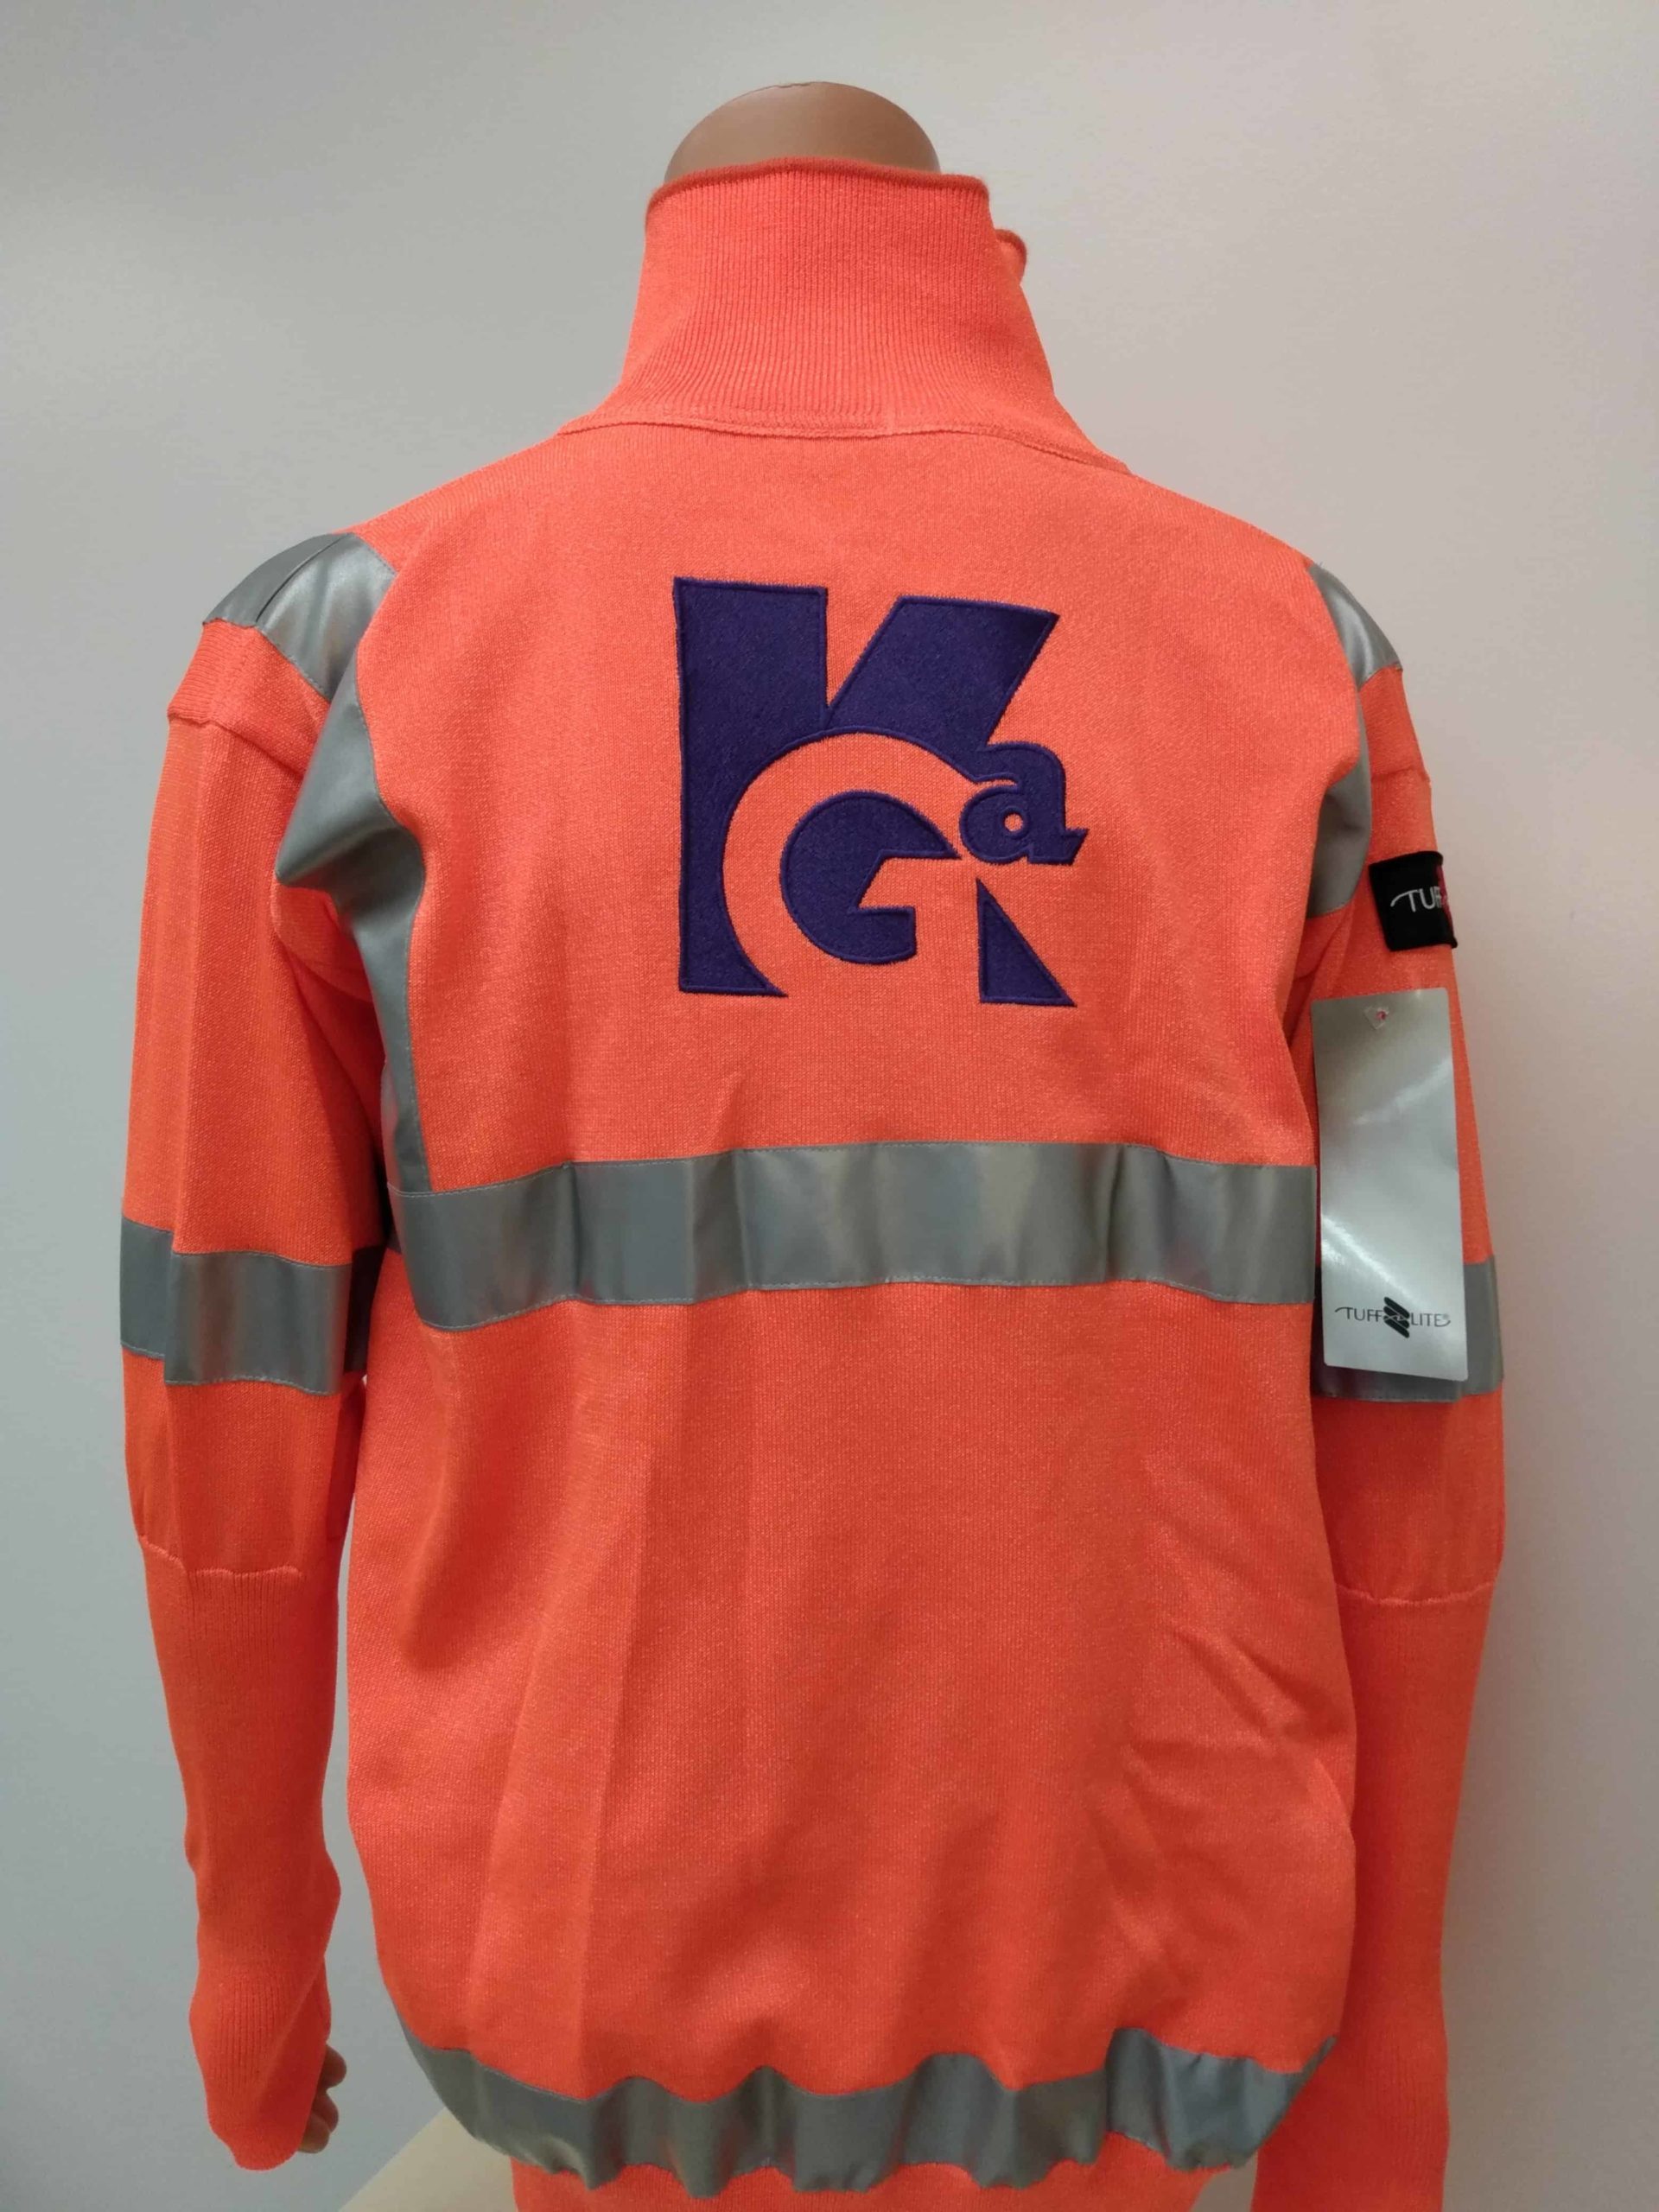 KGA Keel Jacket - Orange) Tuff-N-Lite® (Hi-Viz